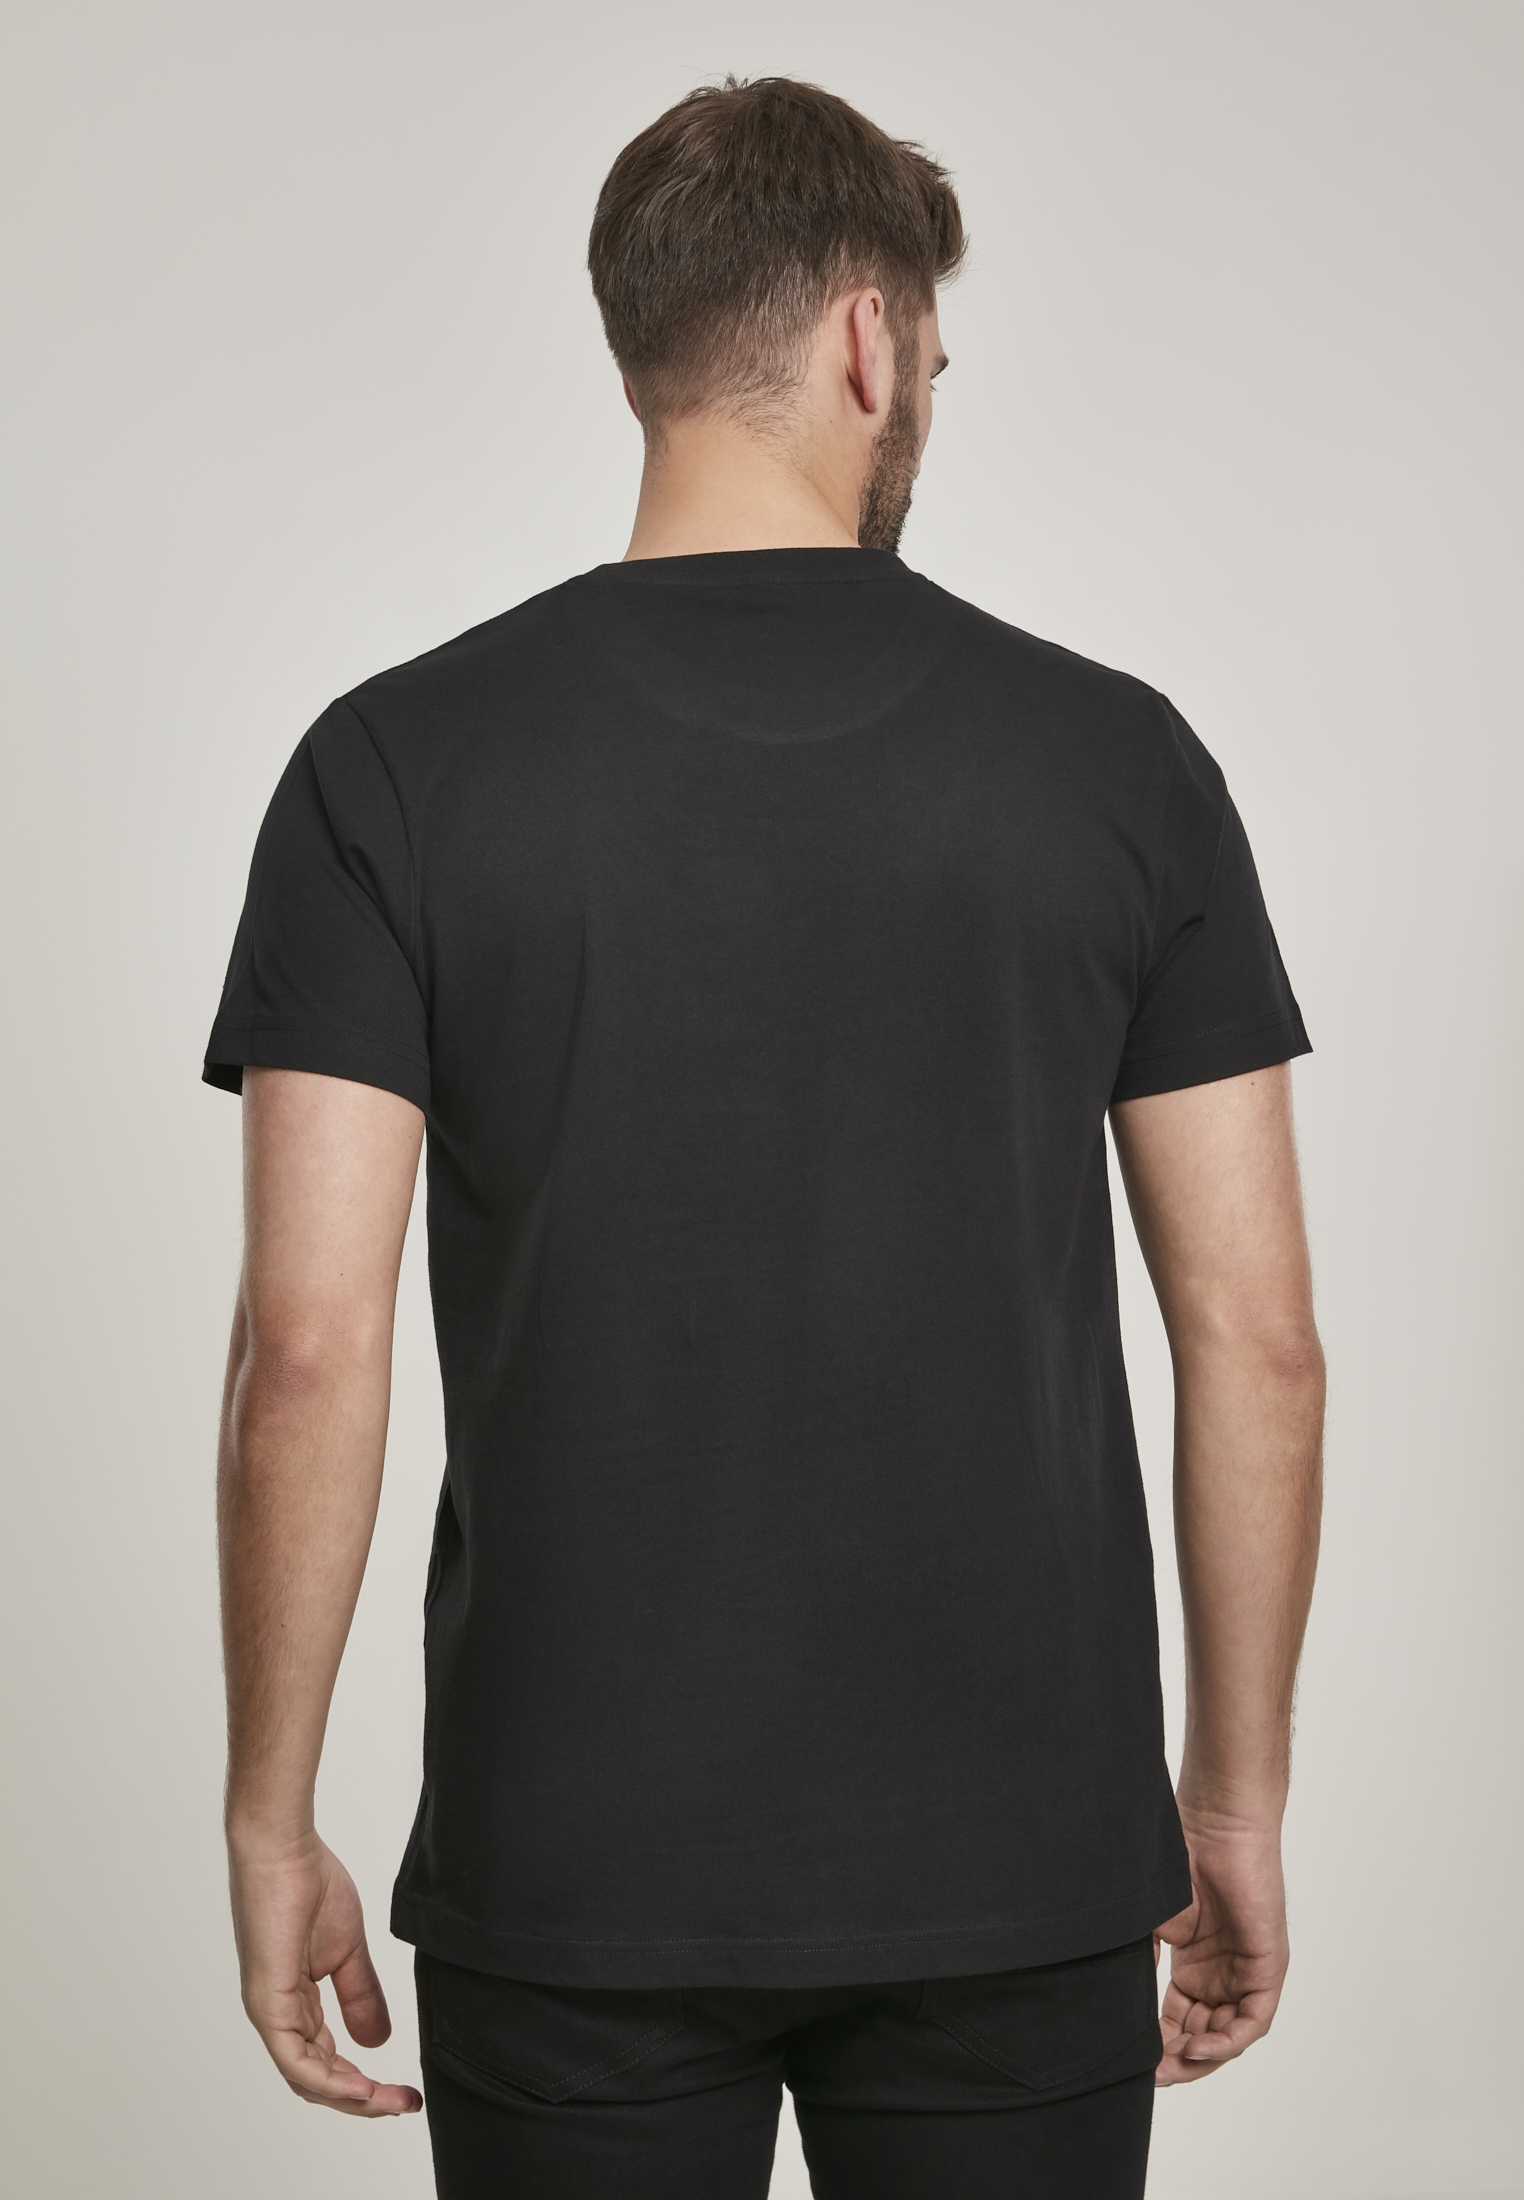 T-Shirts Friends Logo Tee in Farbe black